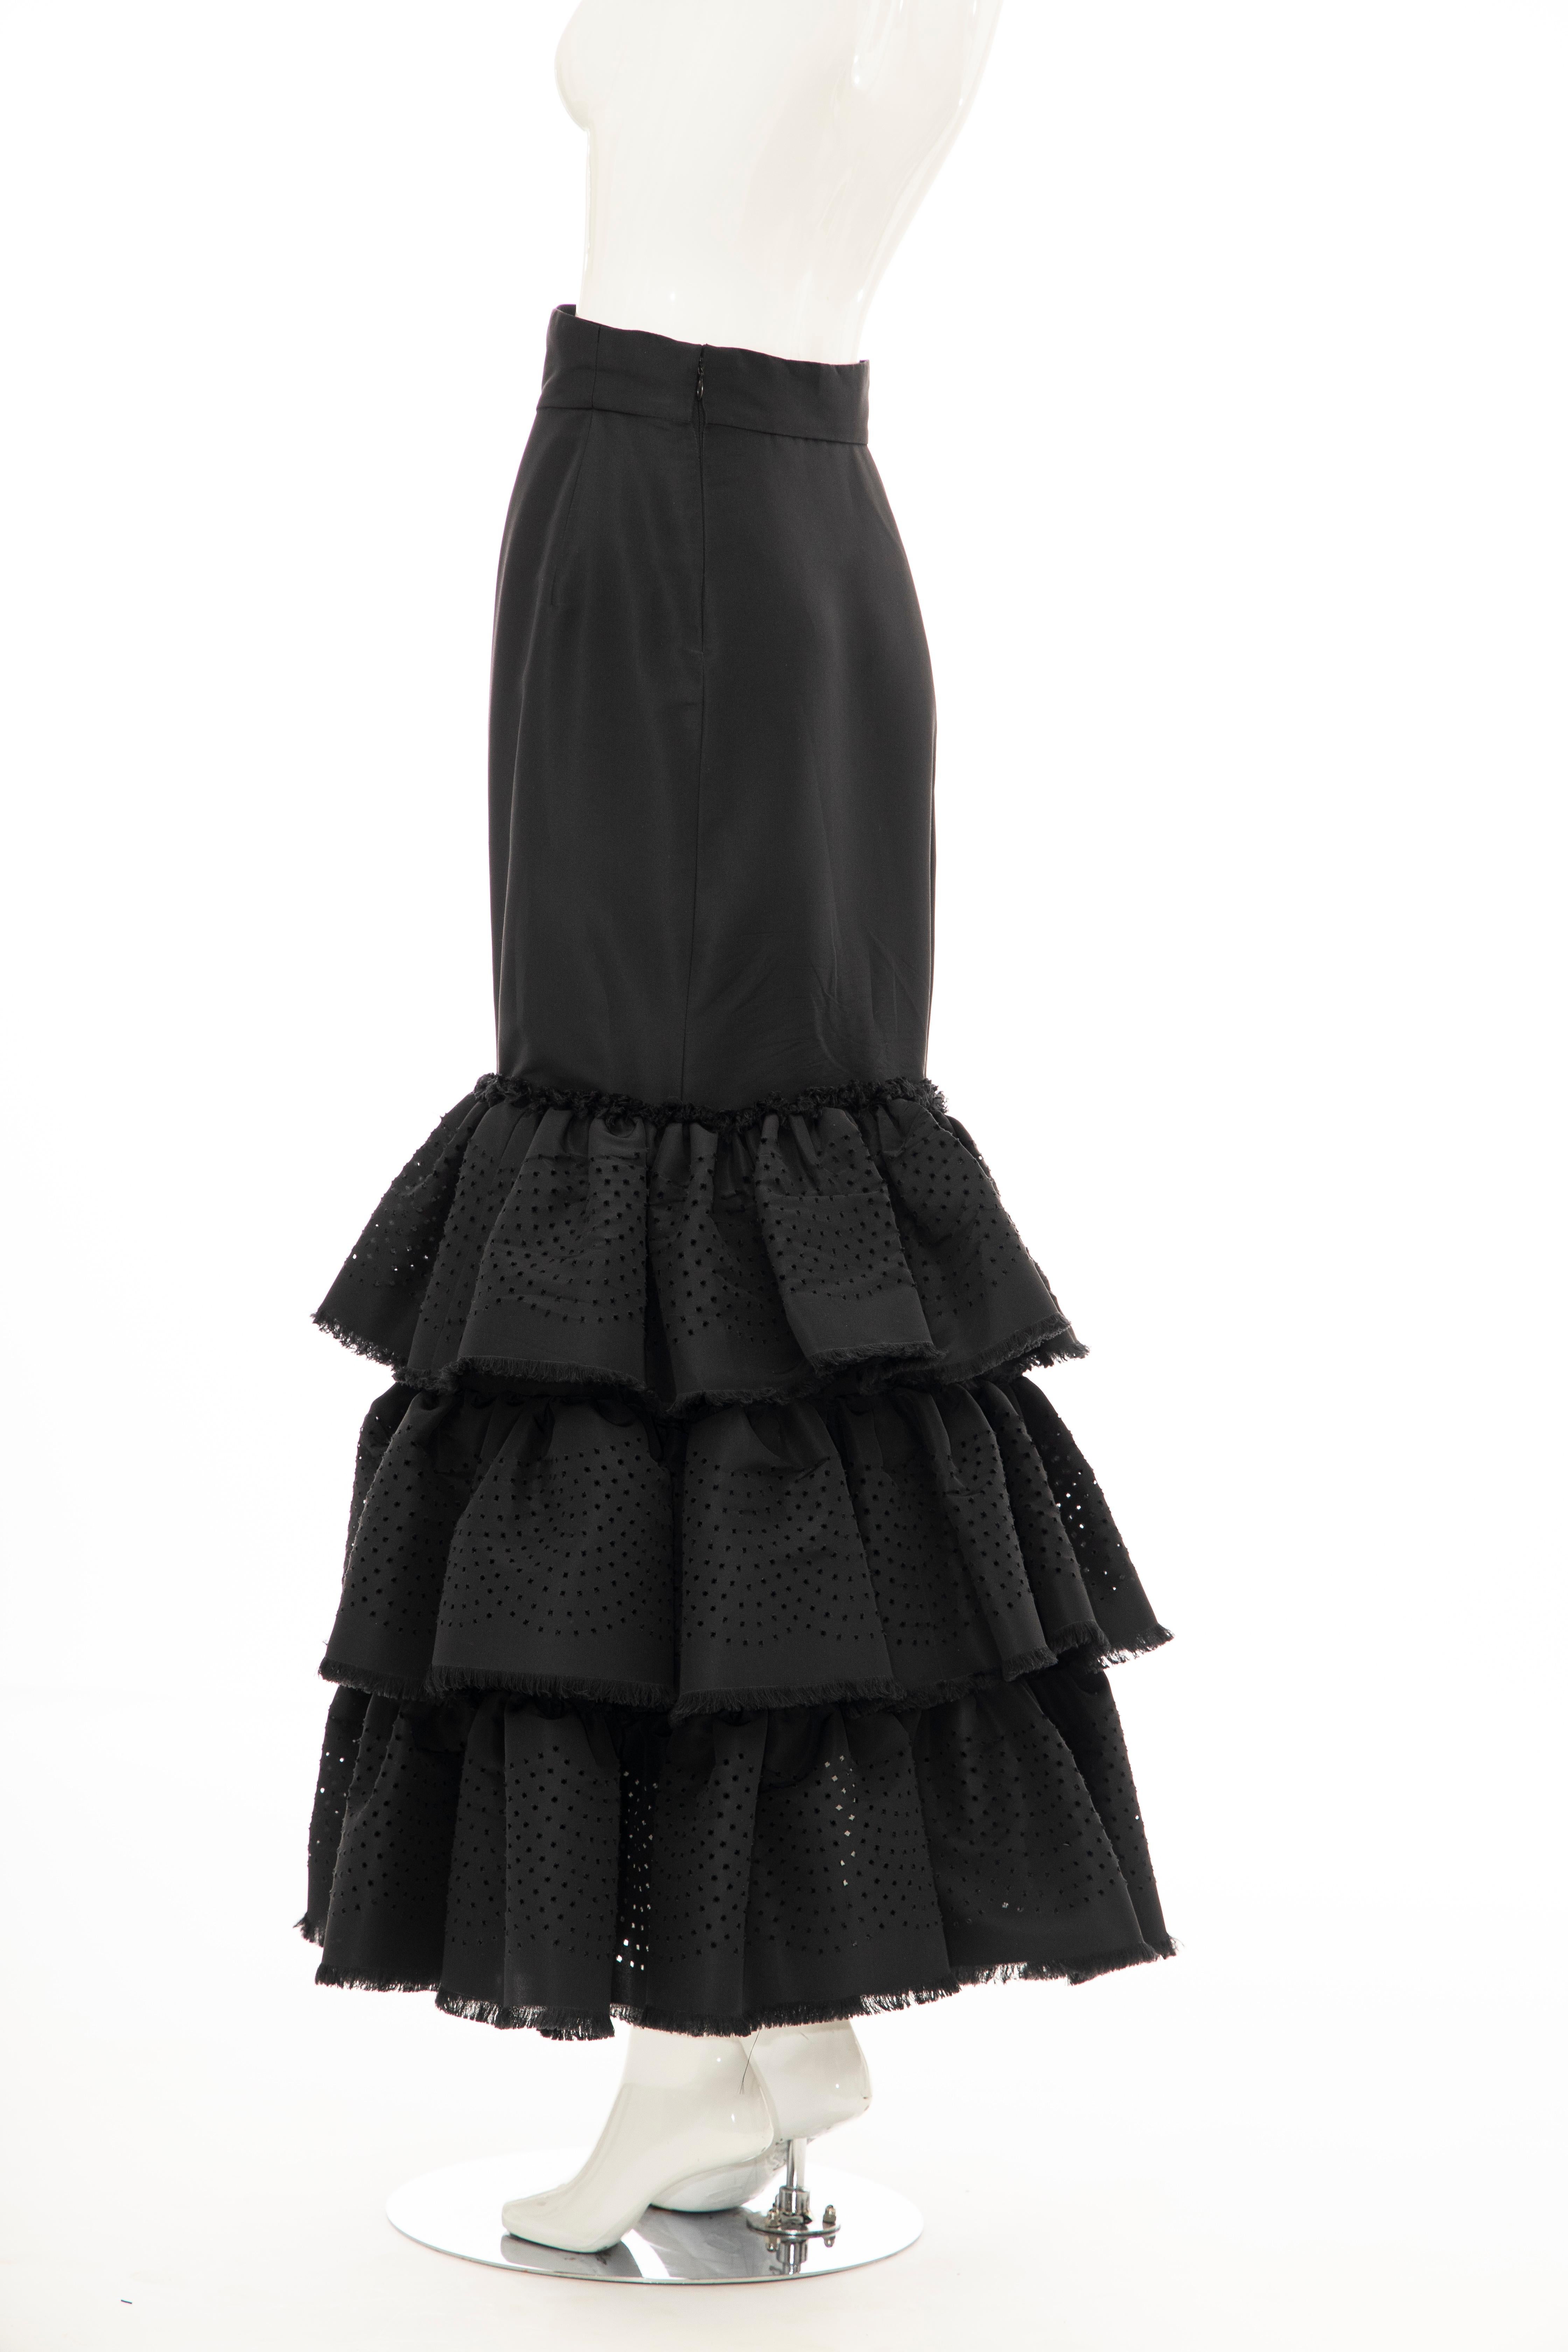 Oscar de la Renta, Fall 2001 black punched silk faille evening skirt with back zip closure.

Documented: Oscar de la Renta 